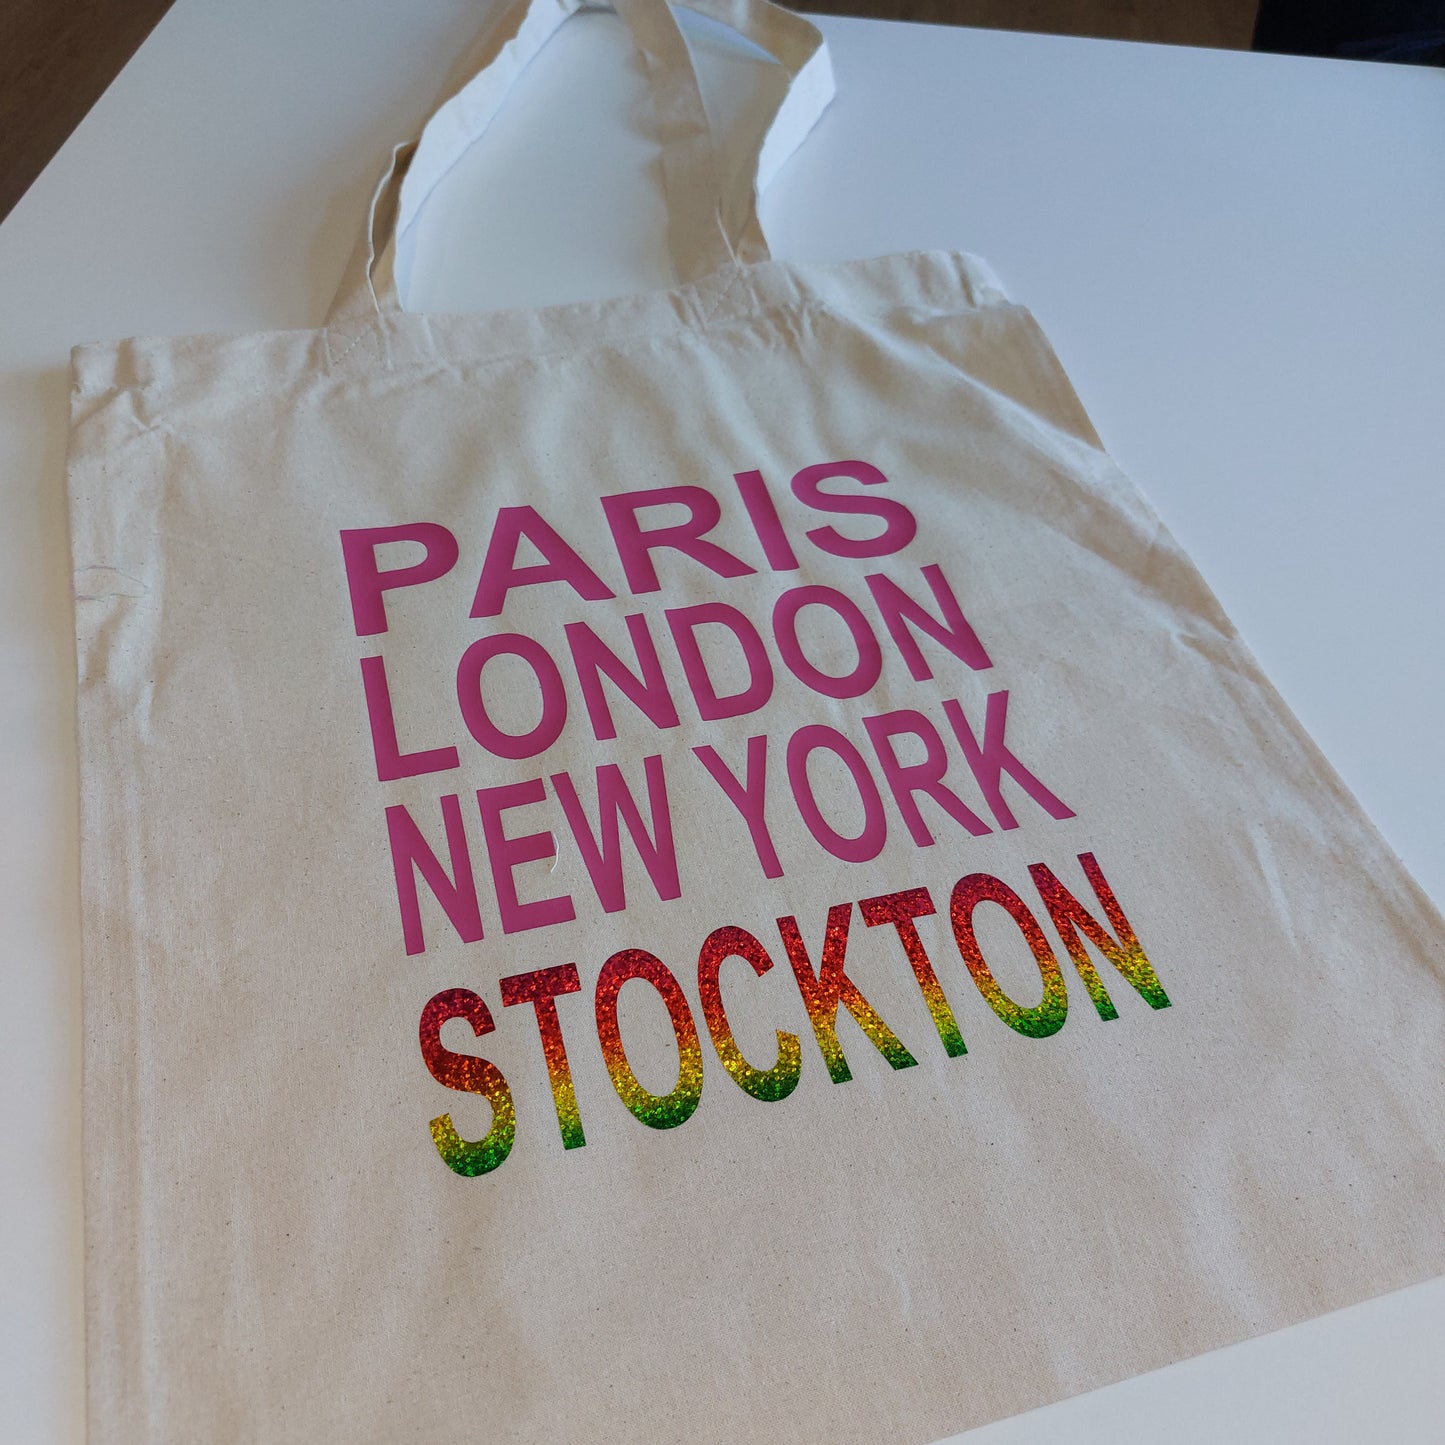 STOCKTON My Town Tote Bag